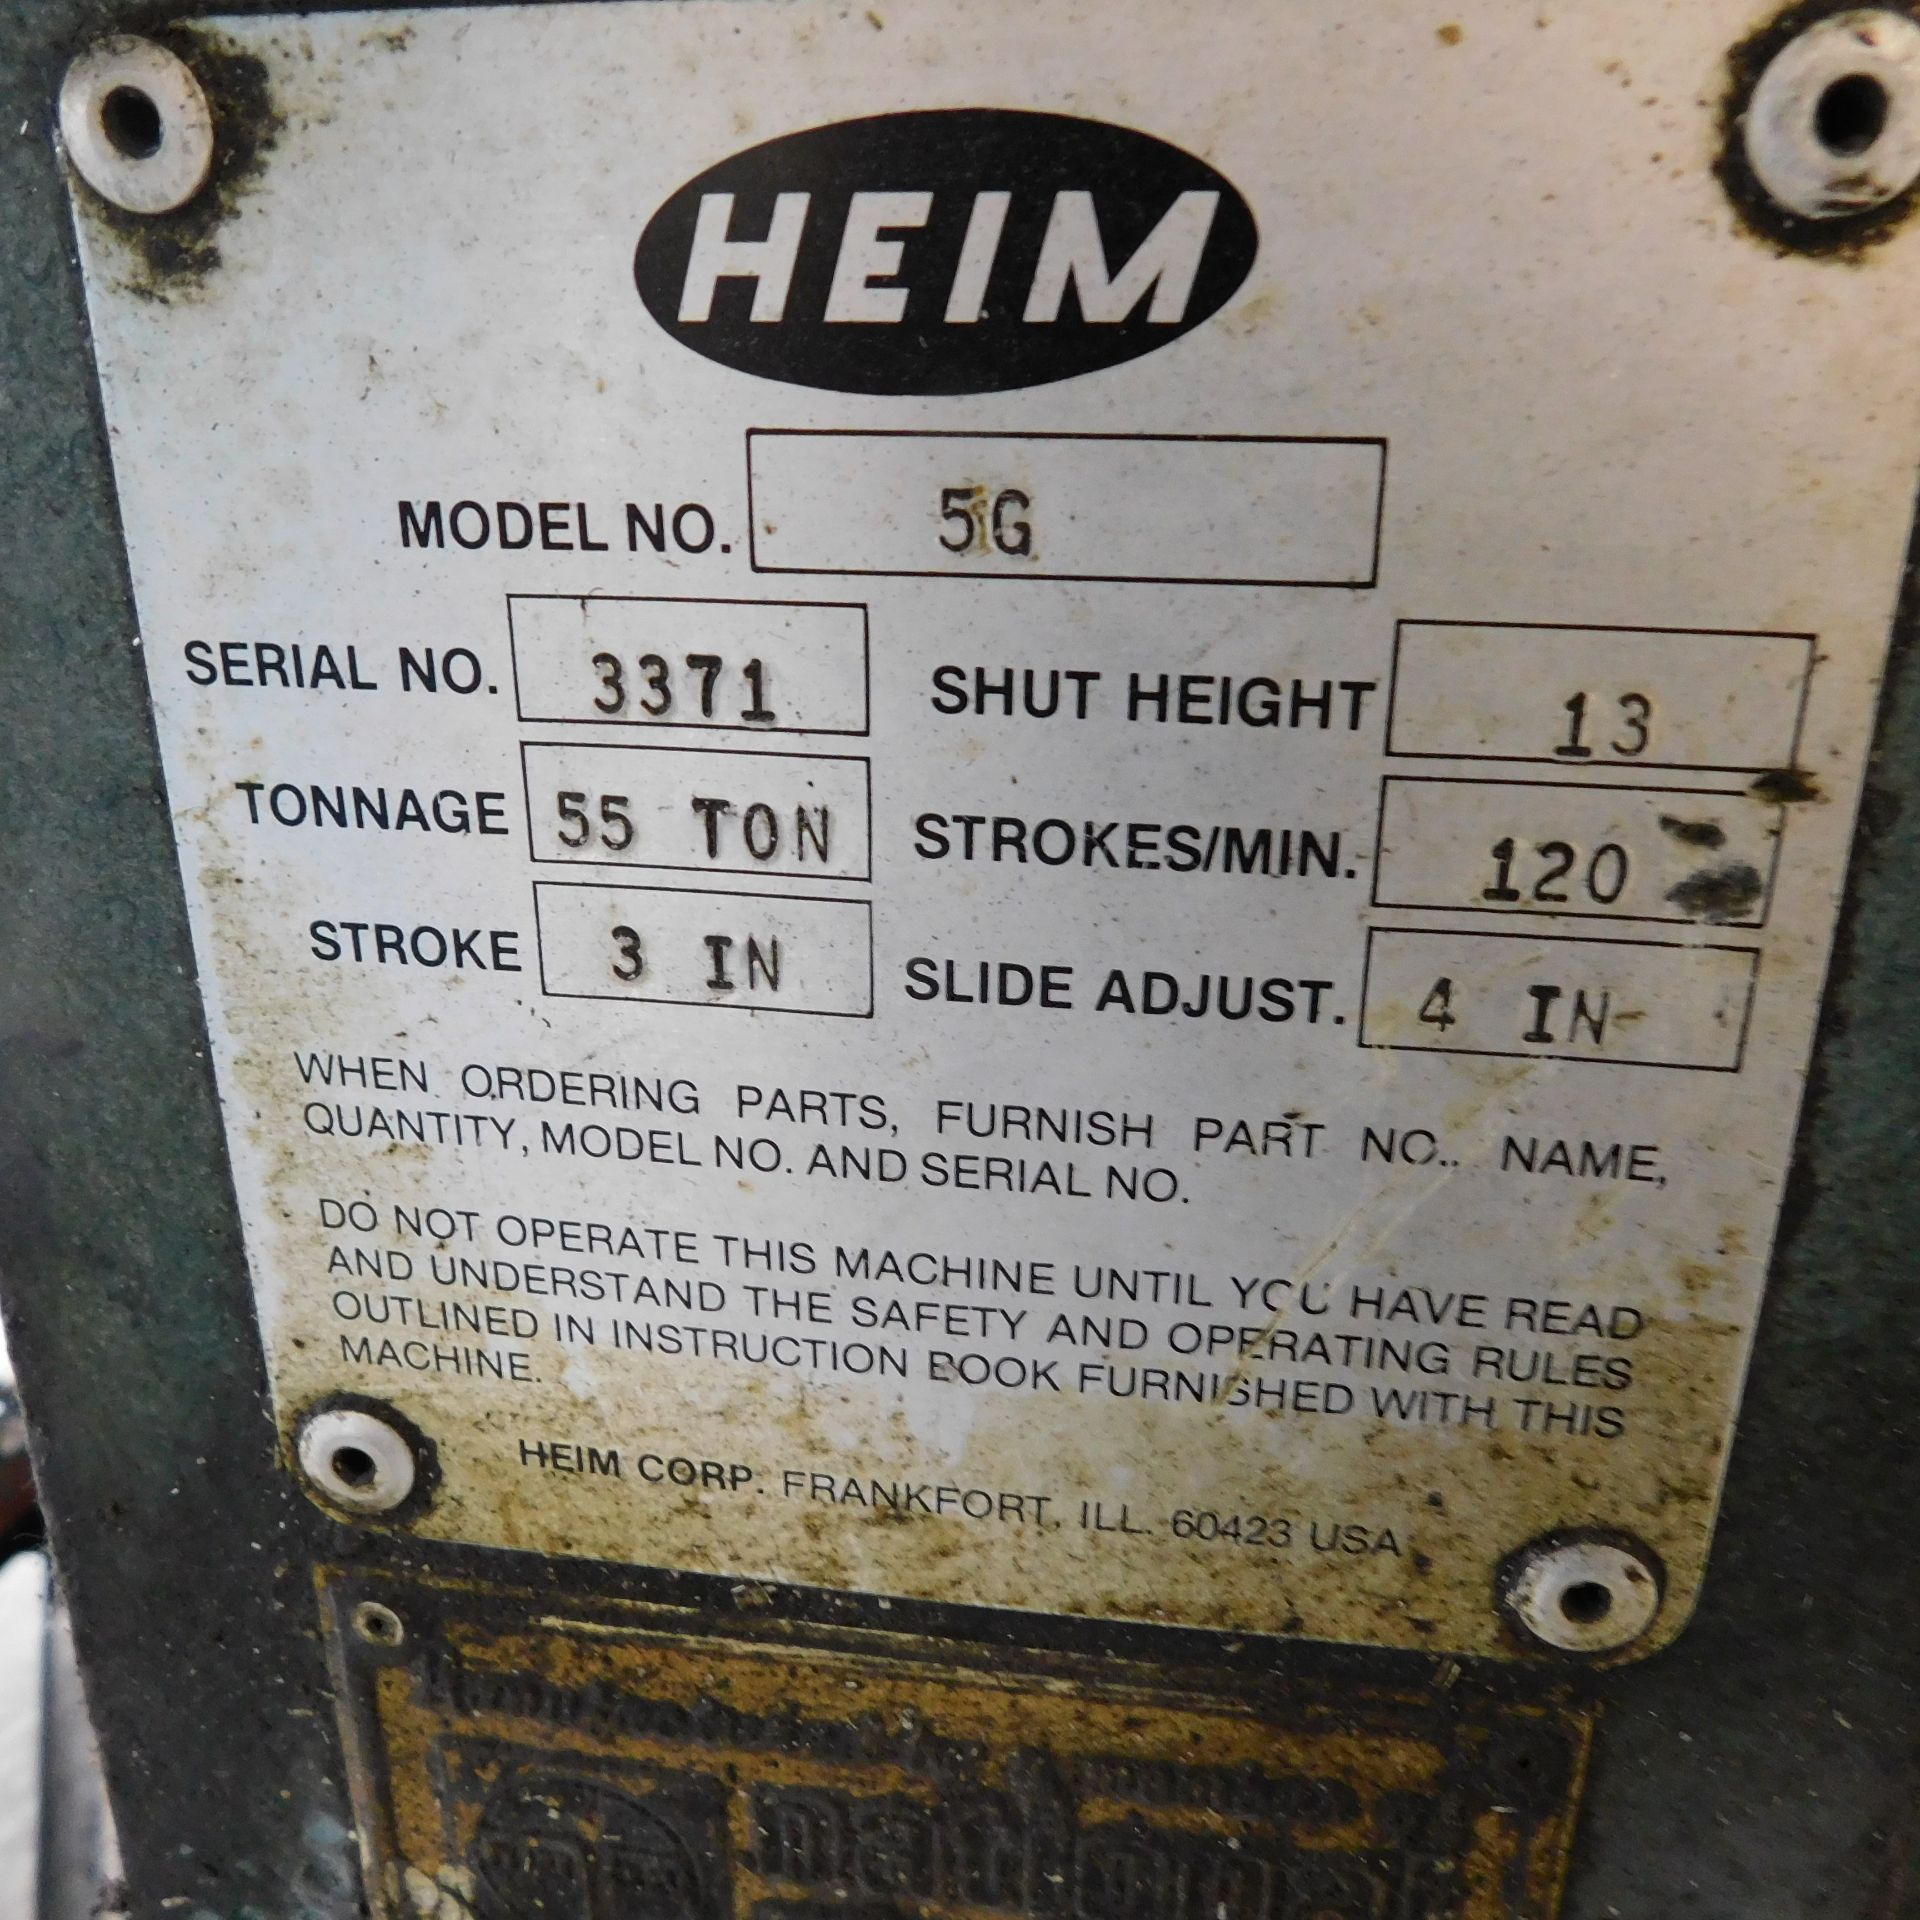 Heim Model 5G OBI Punch Press, s/n 3371, 55 Ton, 3" Stroke, 13" Shut Height, 120 SPM, 27 3/4" X - Image 4 of 9